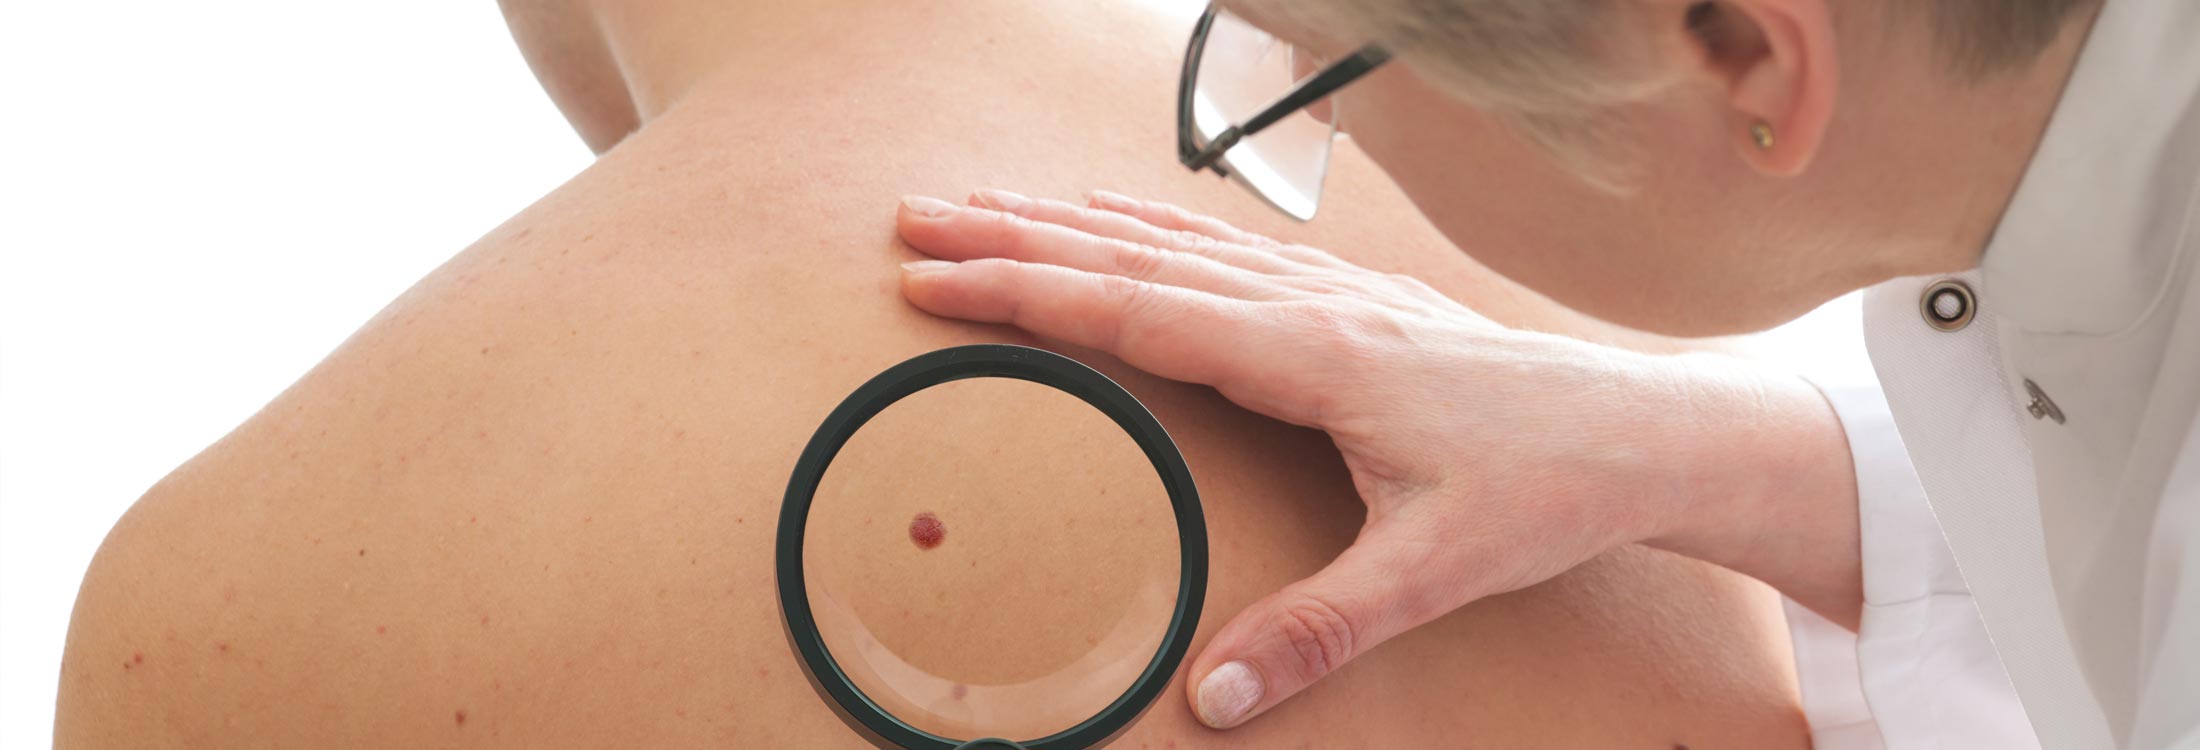 Skin cancer | American Academy of Dermatology